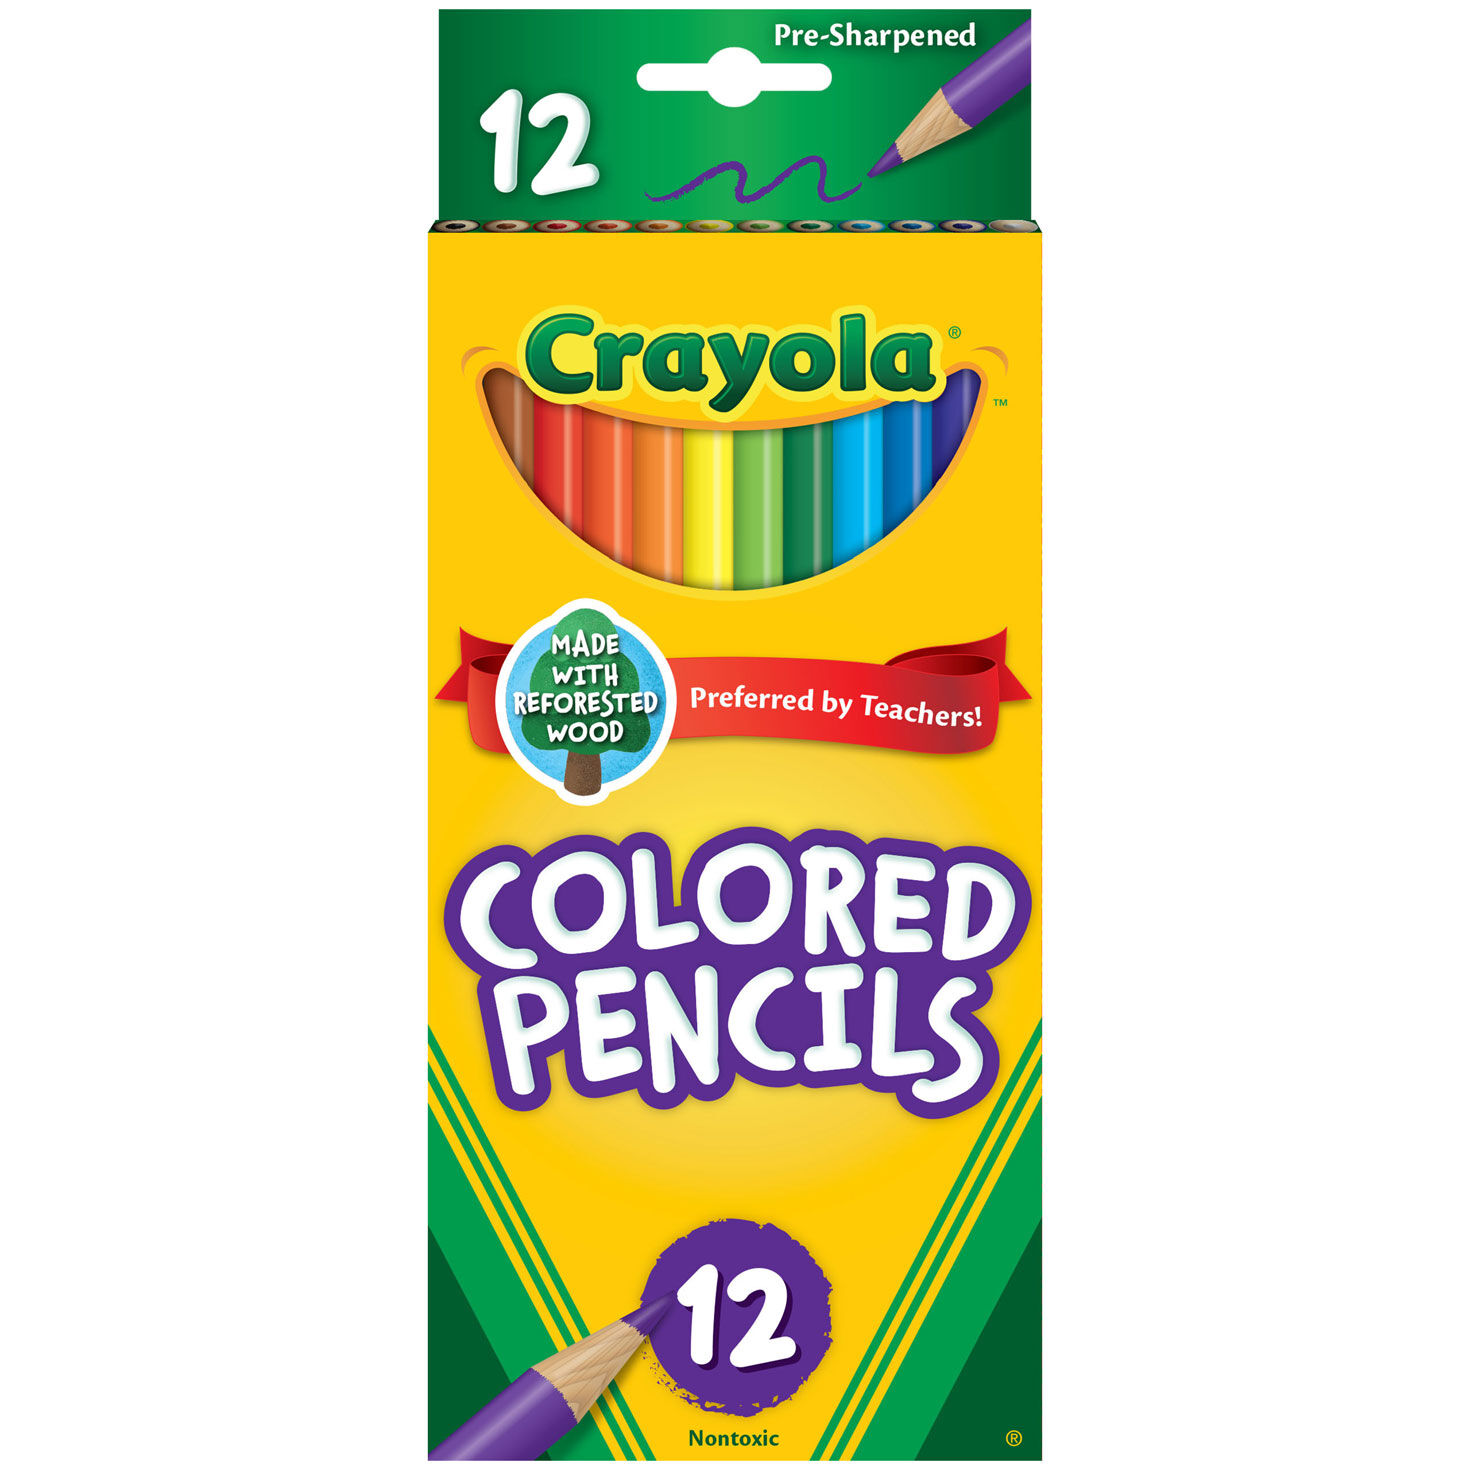 https://www.hallmark.com/dw/image/v2/AALB_PRD/on/demandware.static/-/Sites-hallmark-master/default/dwed724e43/images/finished-goods/products/684012/Crayola-Colored-Pencils-12-count_684012_01.jpg?sfrm=jpg